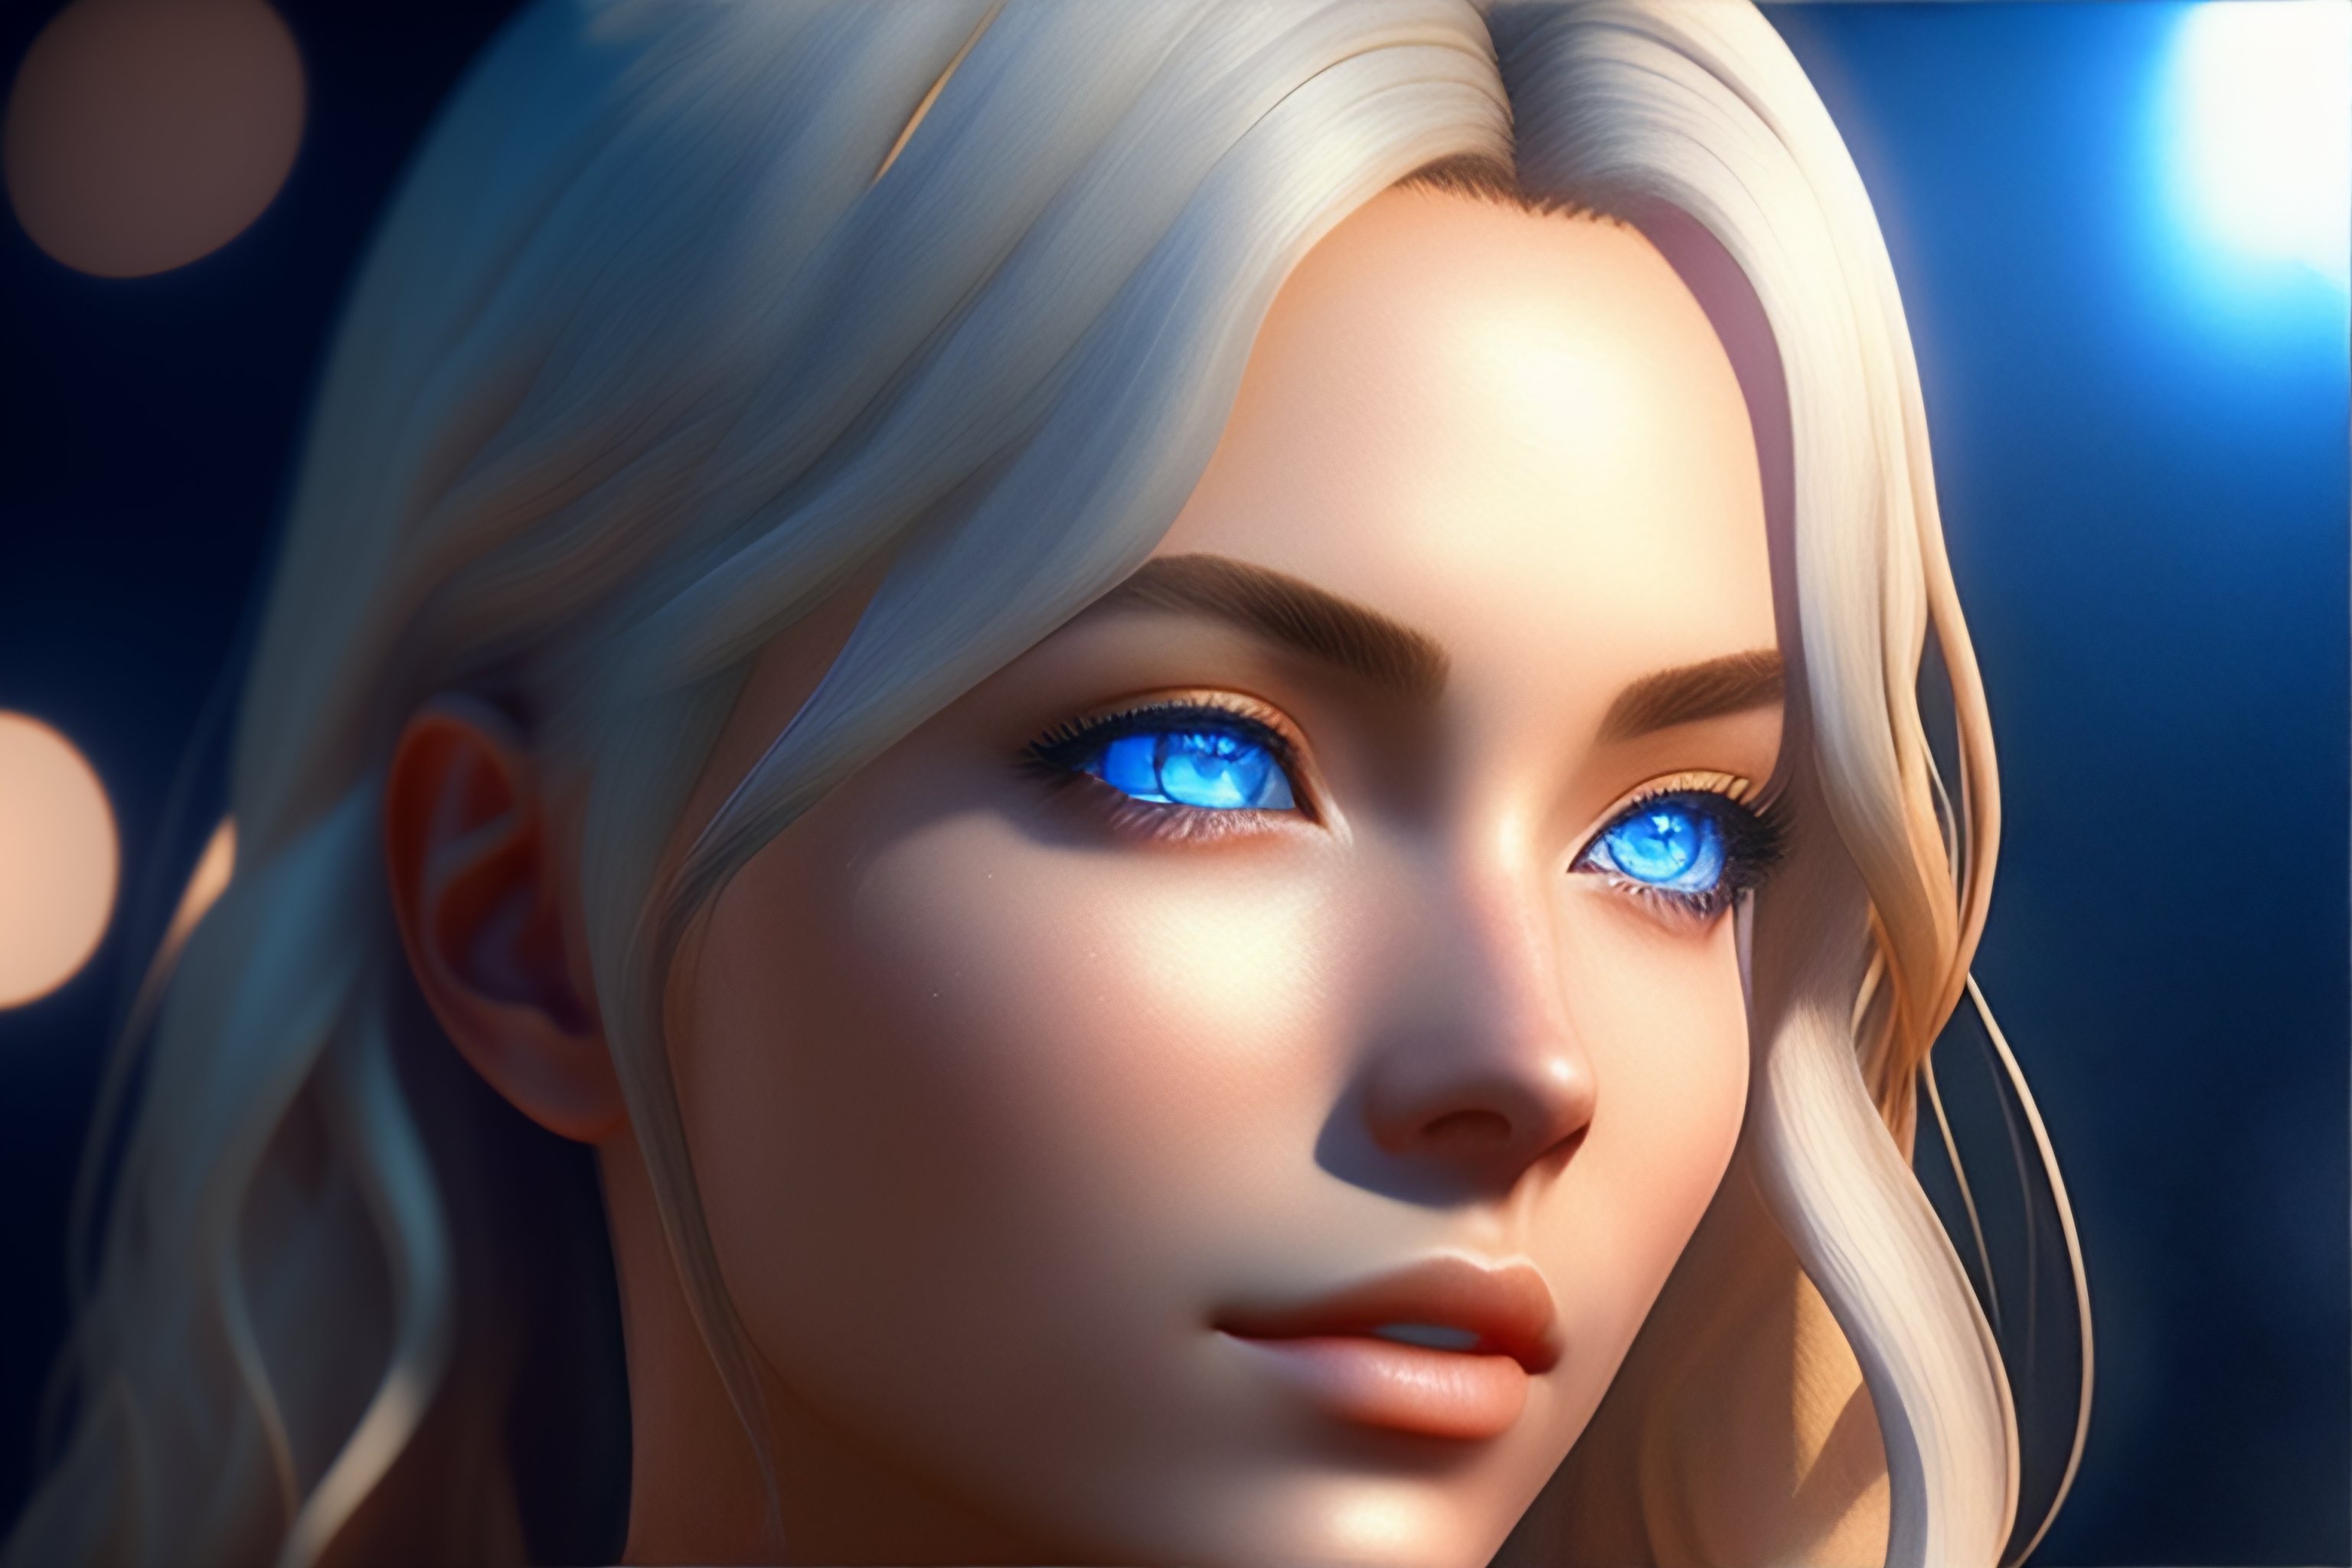 Lexica - A detailed portrait of pretty anime girl blue eyes in bikini ...